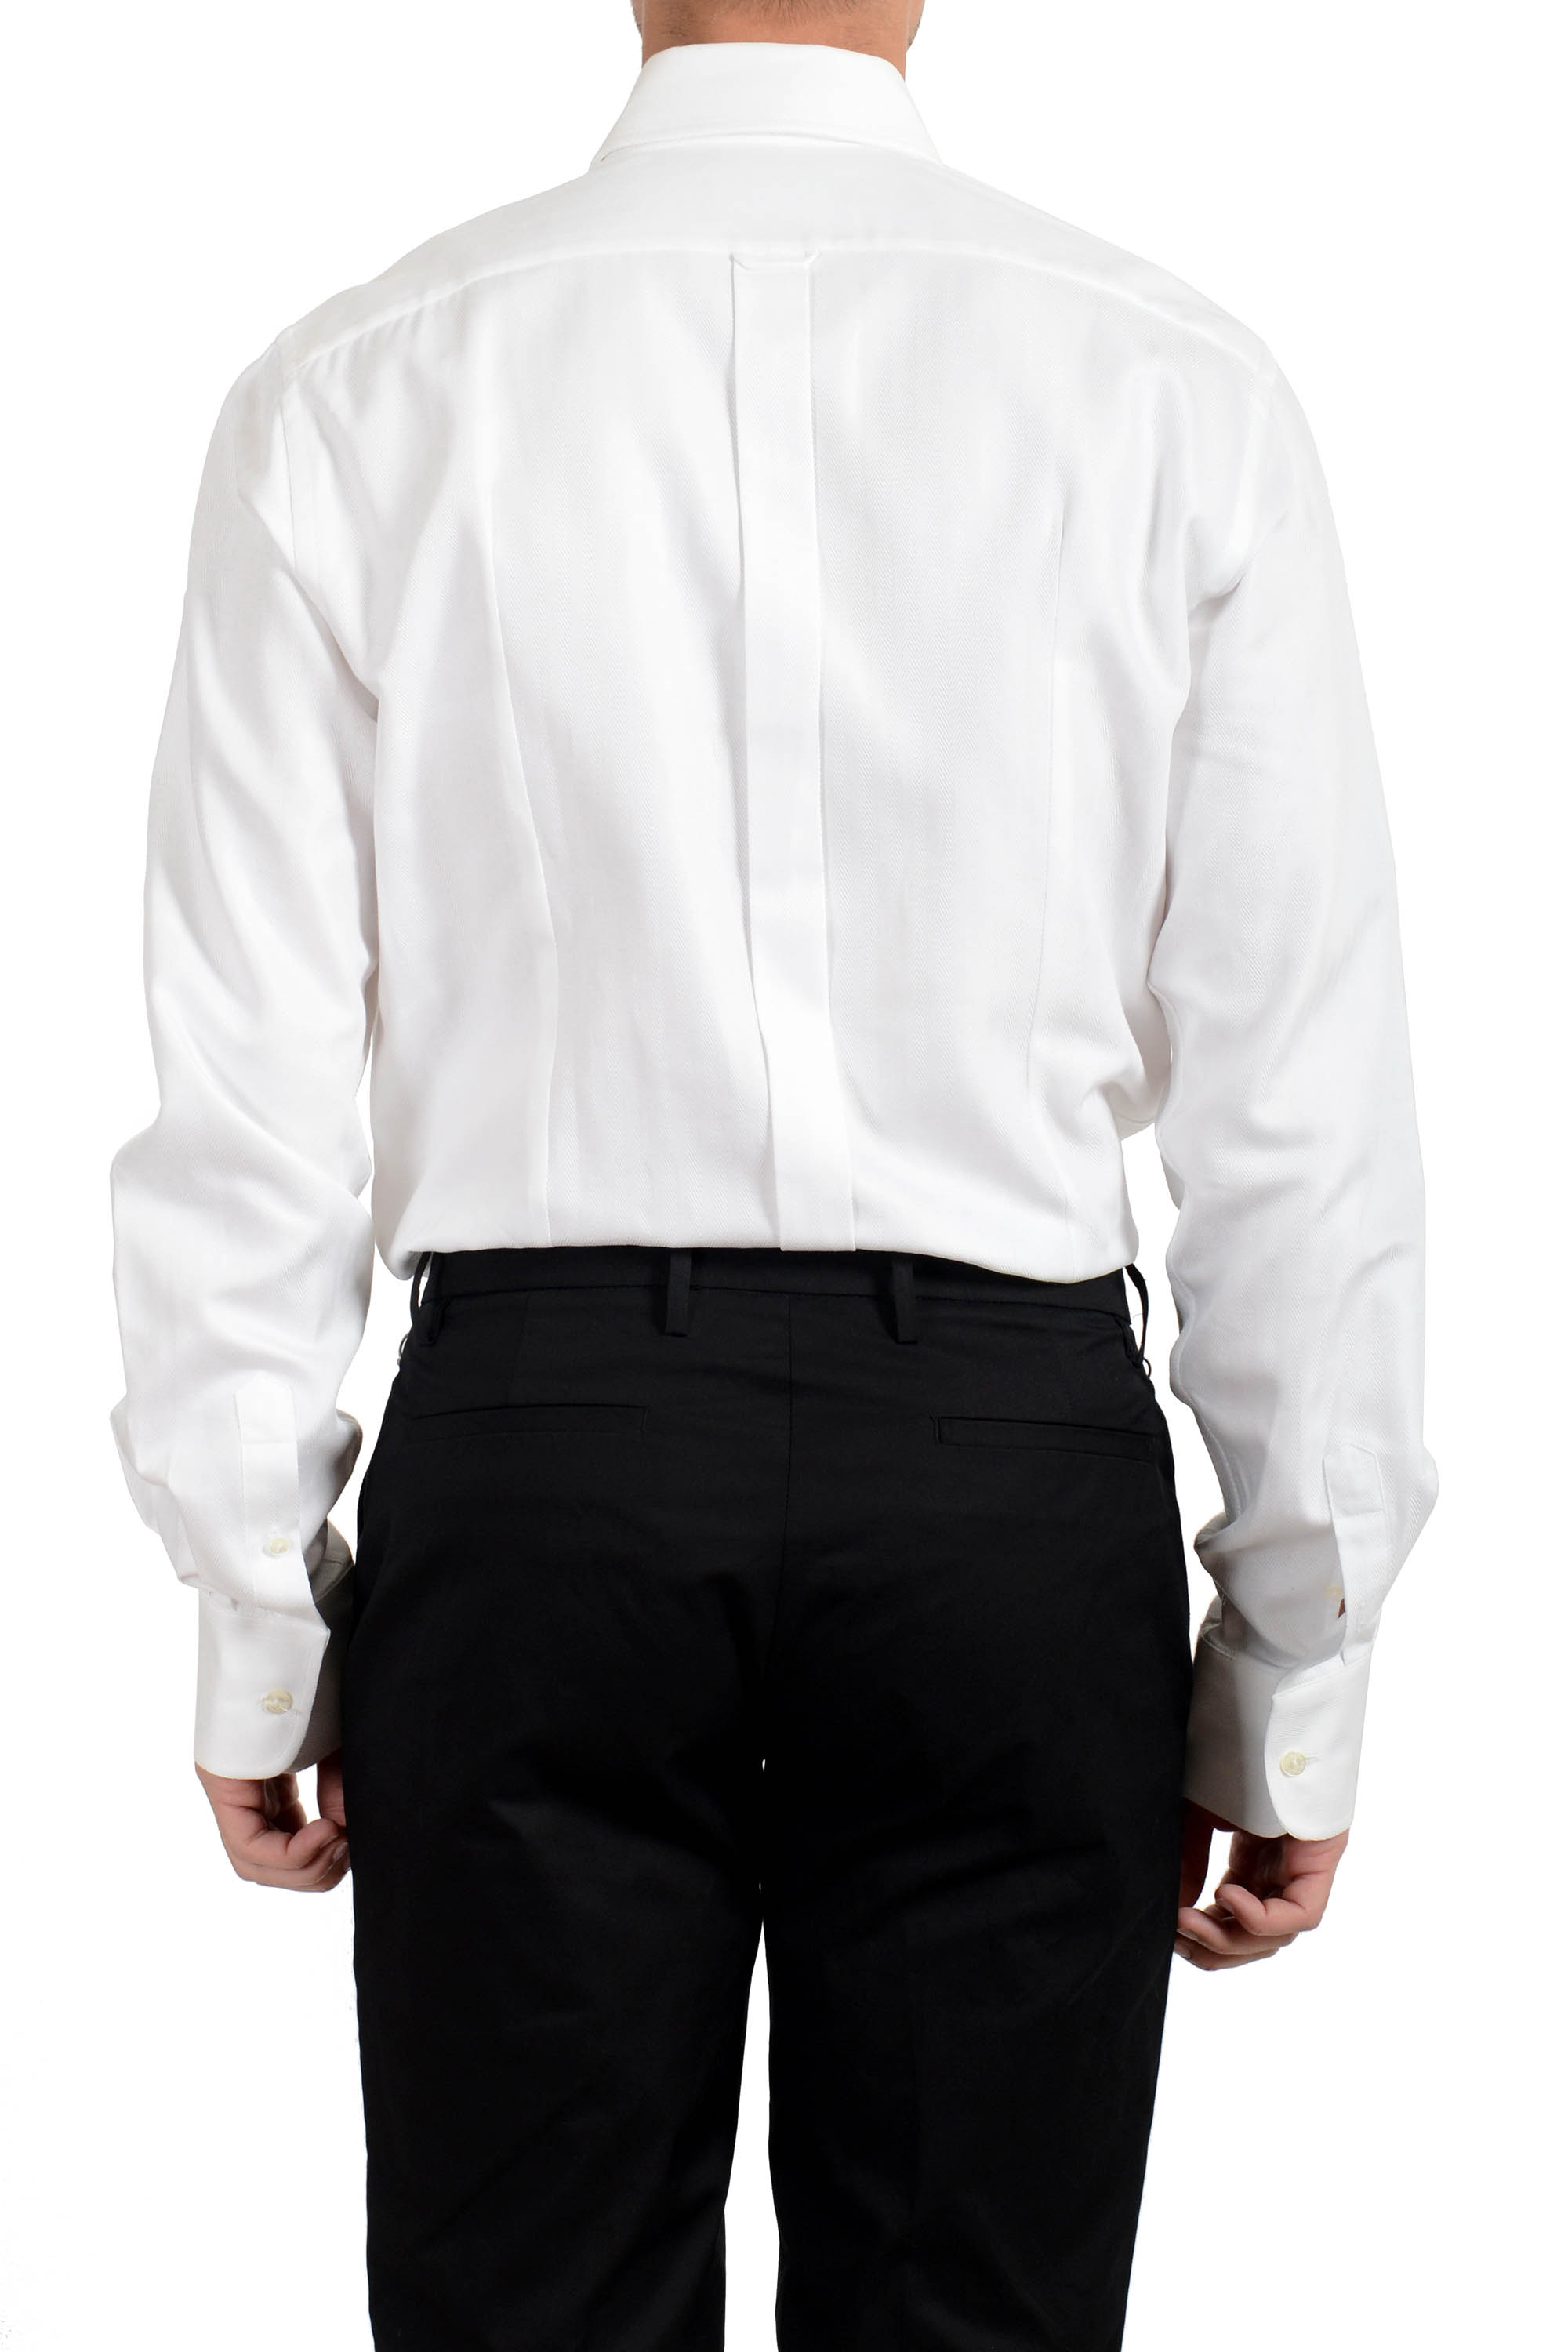 Dolce & Gabbana Mens Striped Long Sleeve Dress Shirt US 16 IT 41